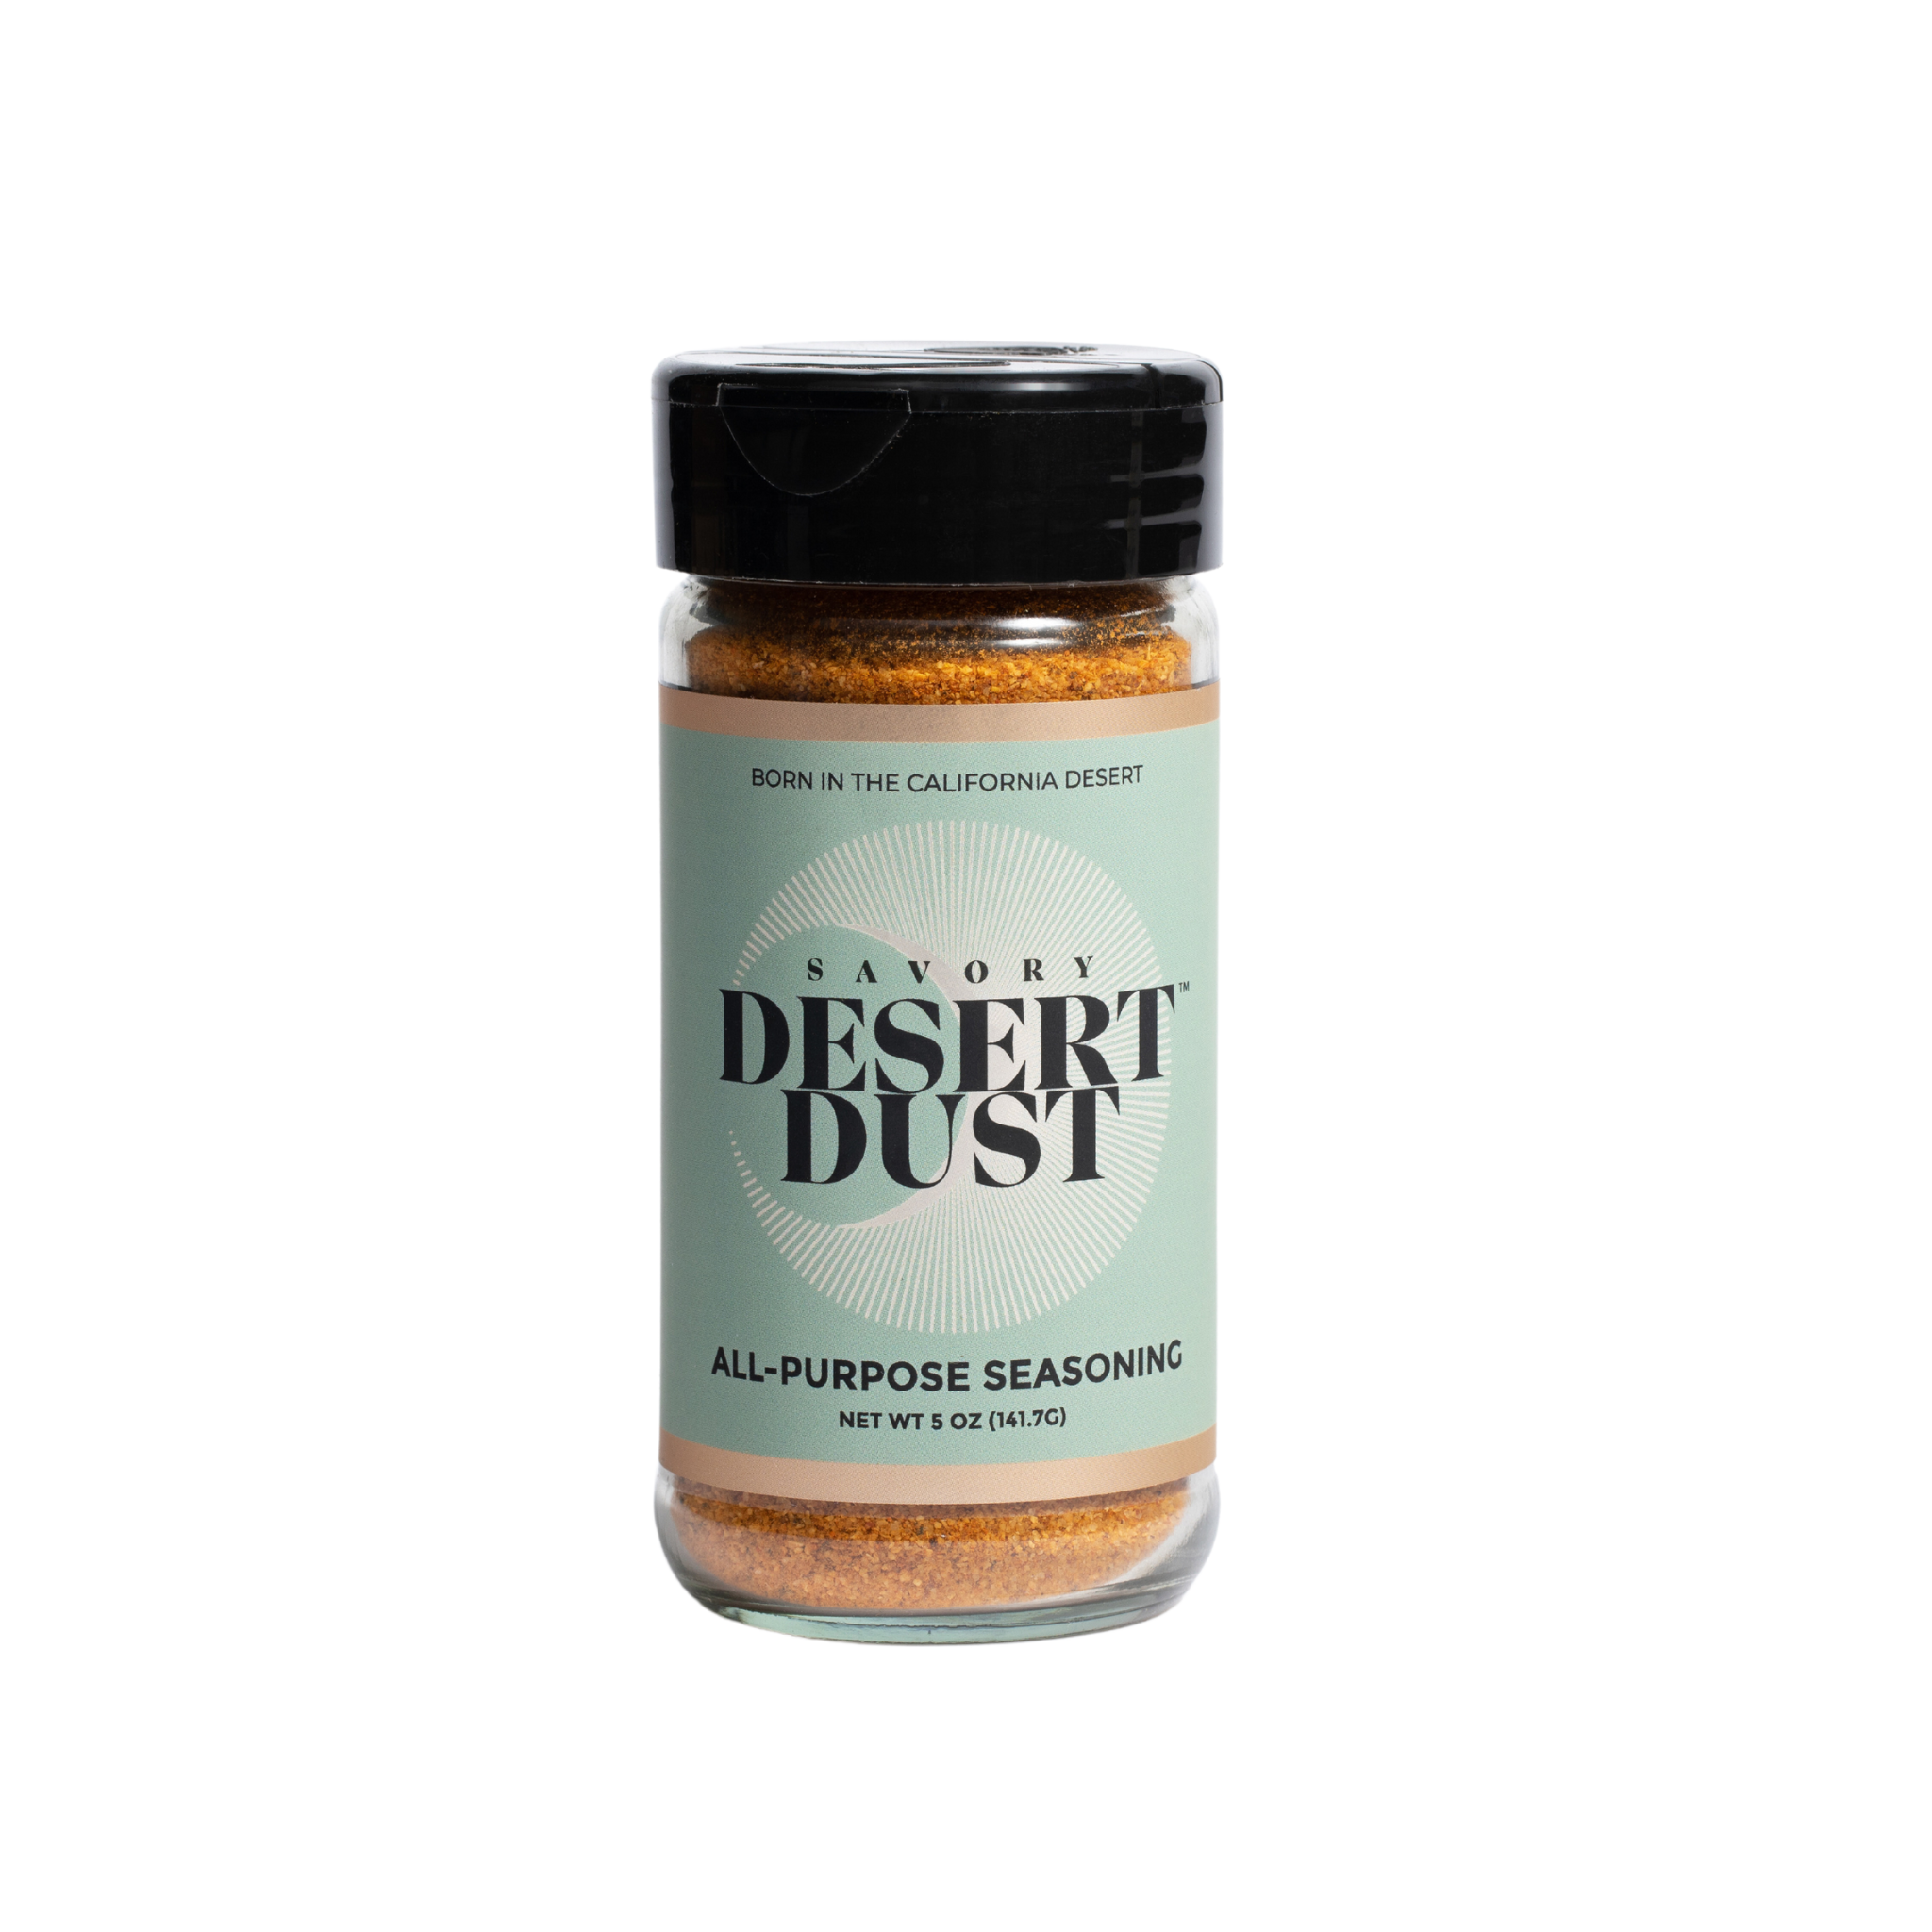 Savory Desert Dust Seasoning